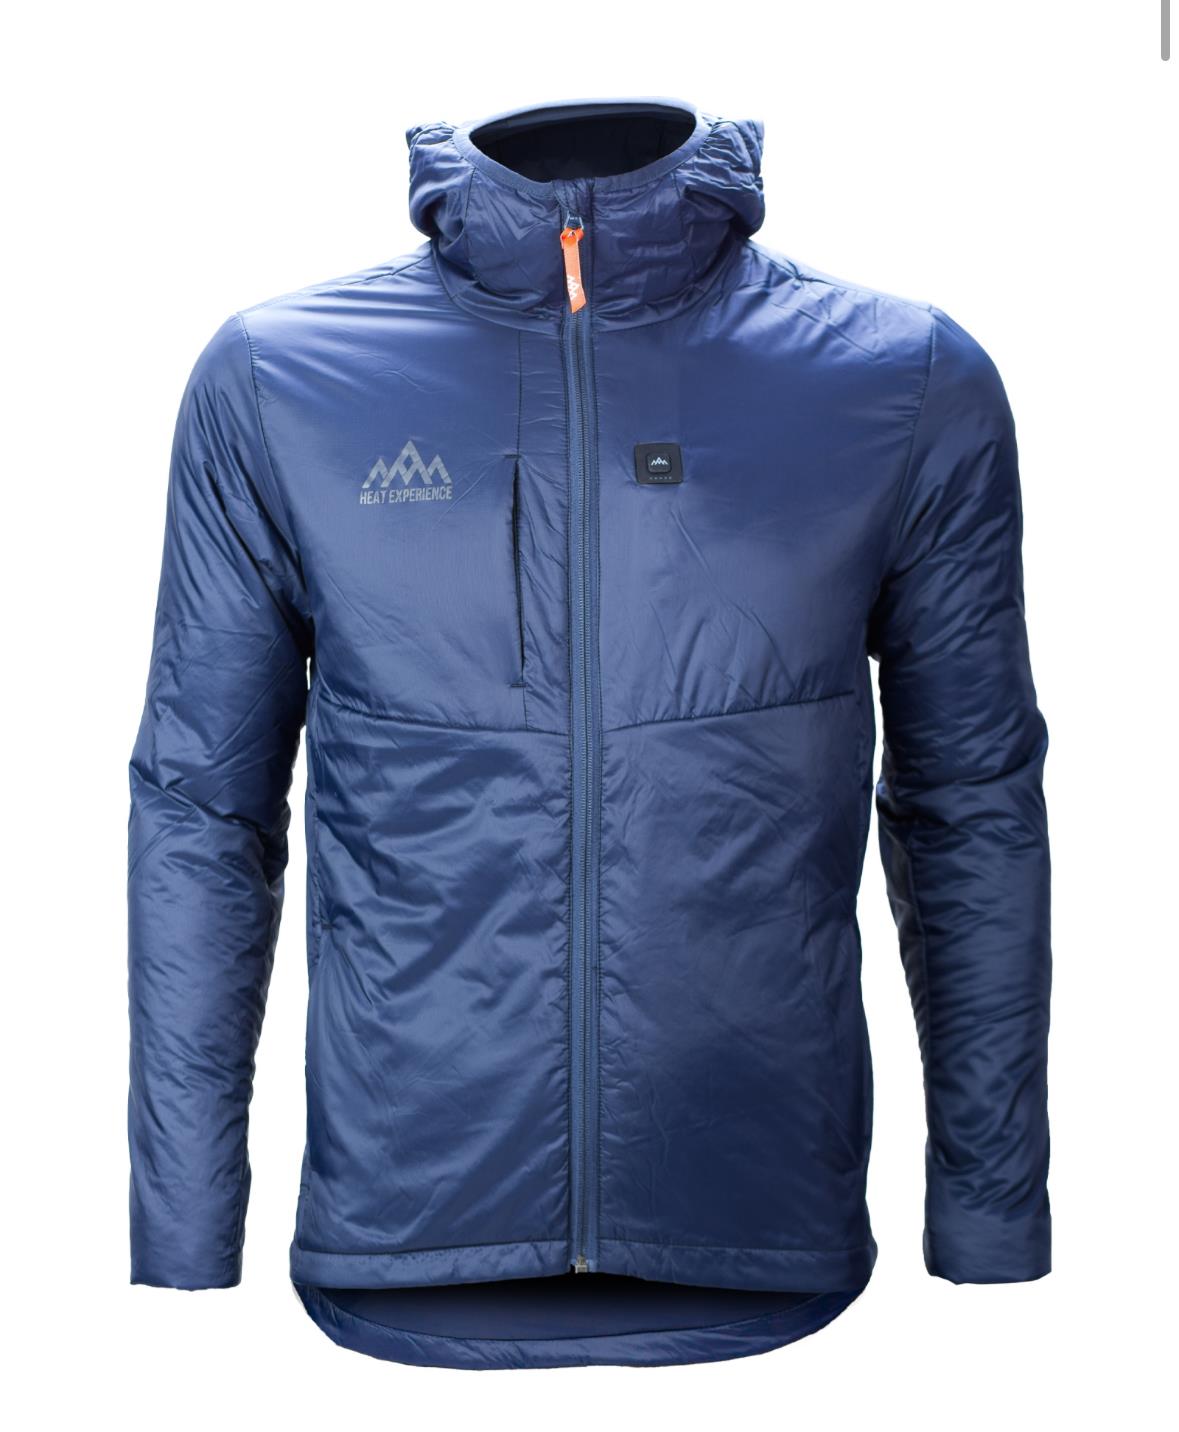 HeatX Hybrid Мужская куртка с подогревом, темно-синяя, S